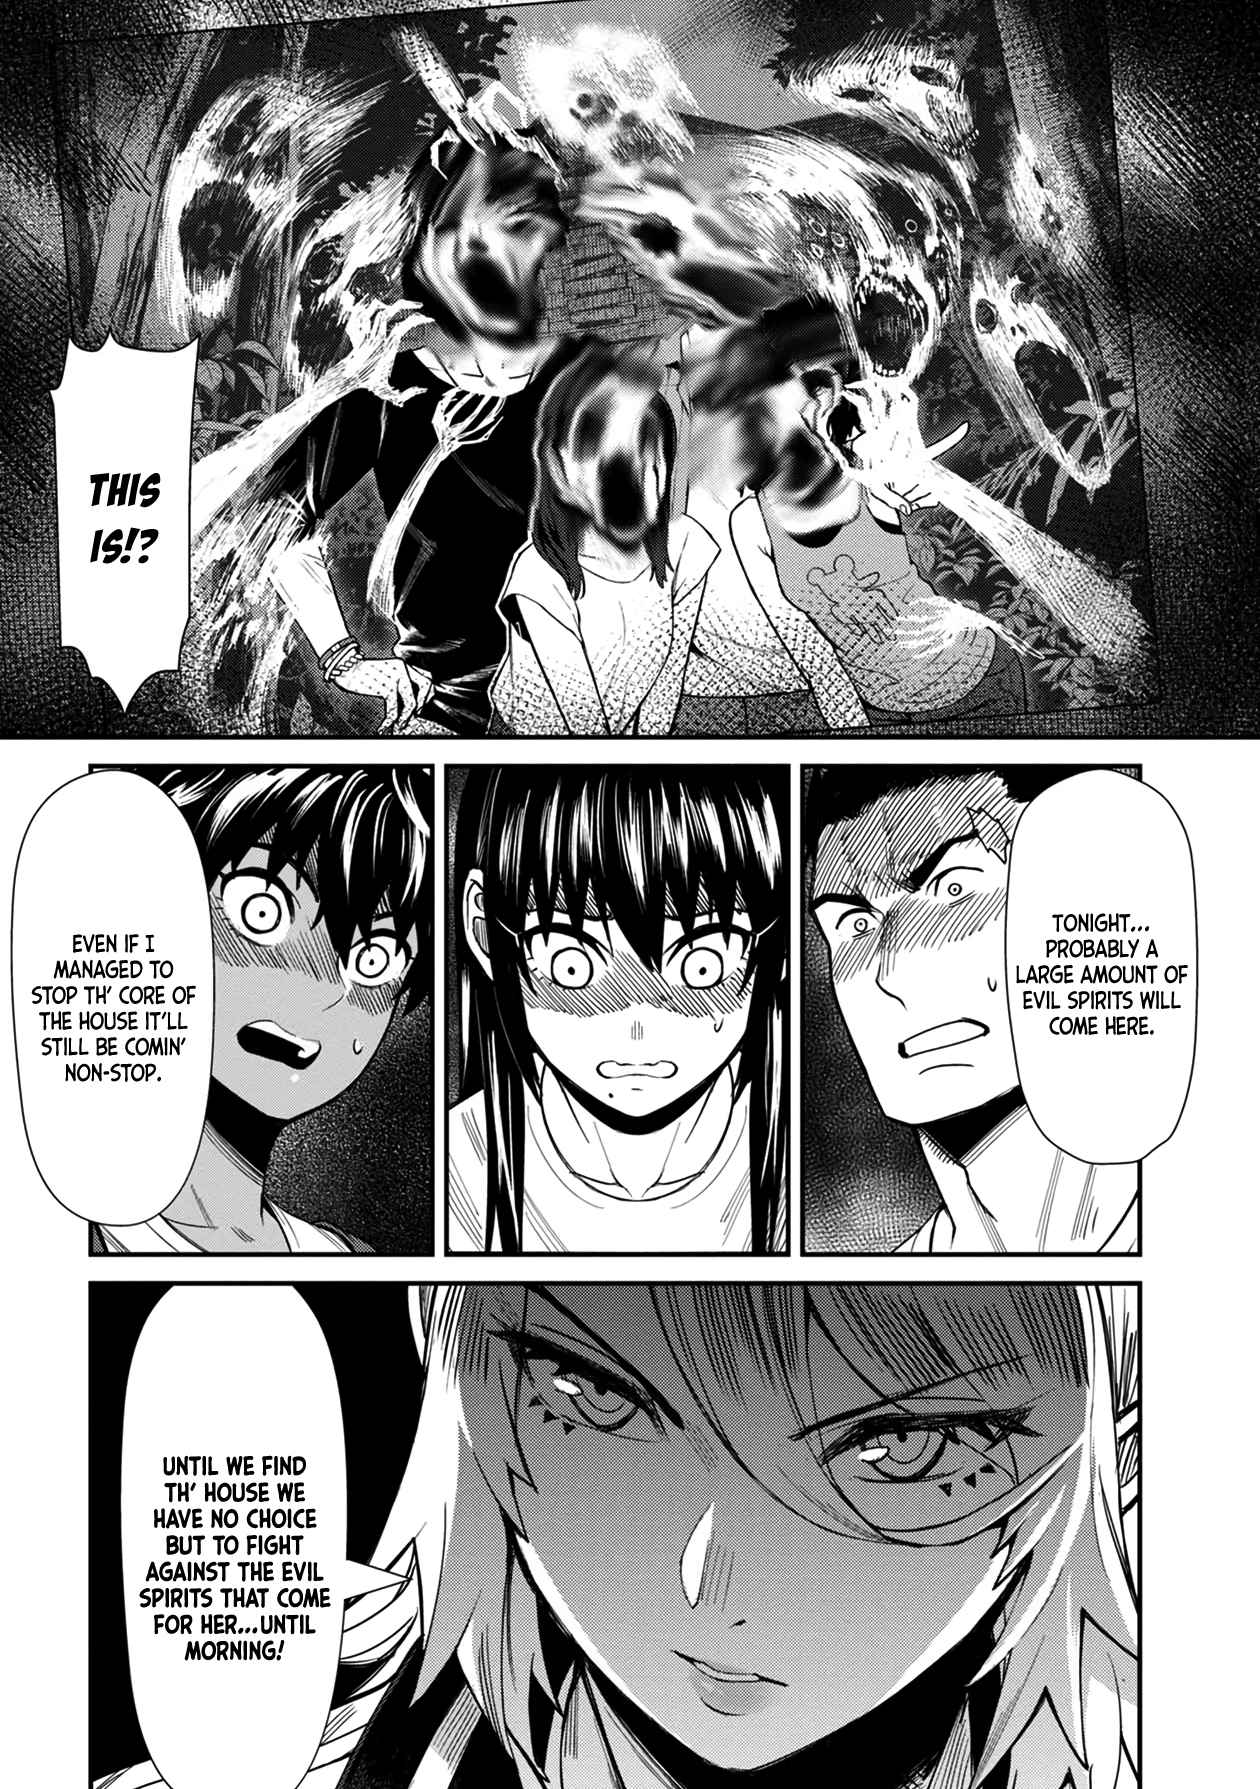 Furyou Taimashi Reina Vol. 3 Ch. 23 Exorcism #23 Out of Time